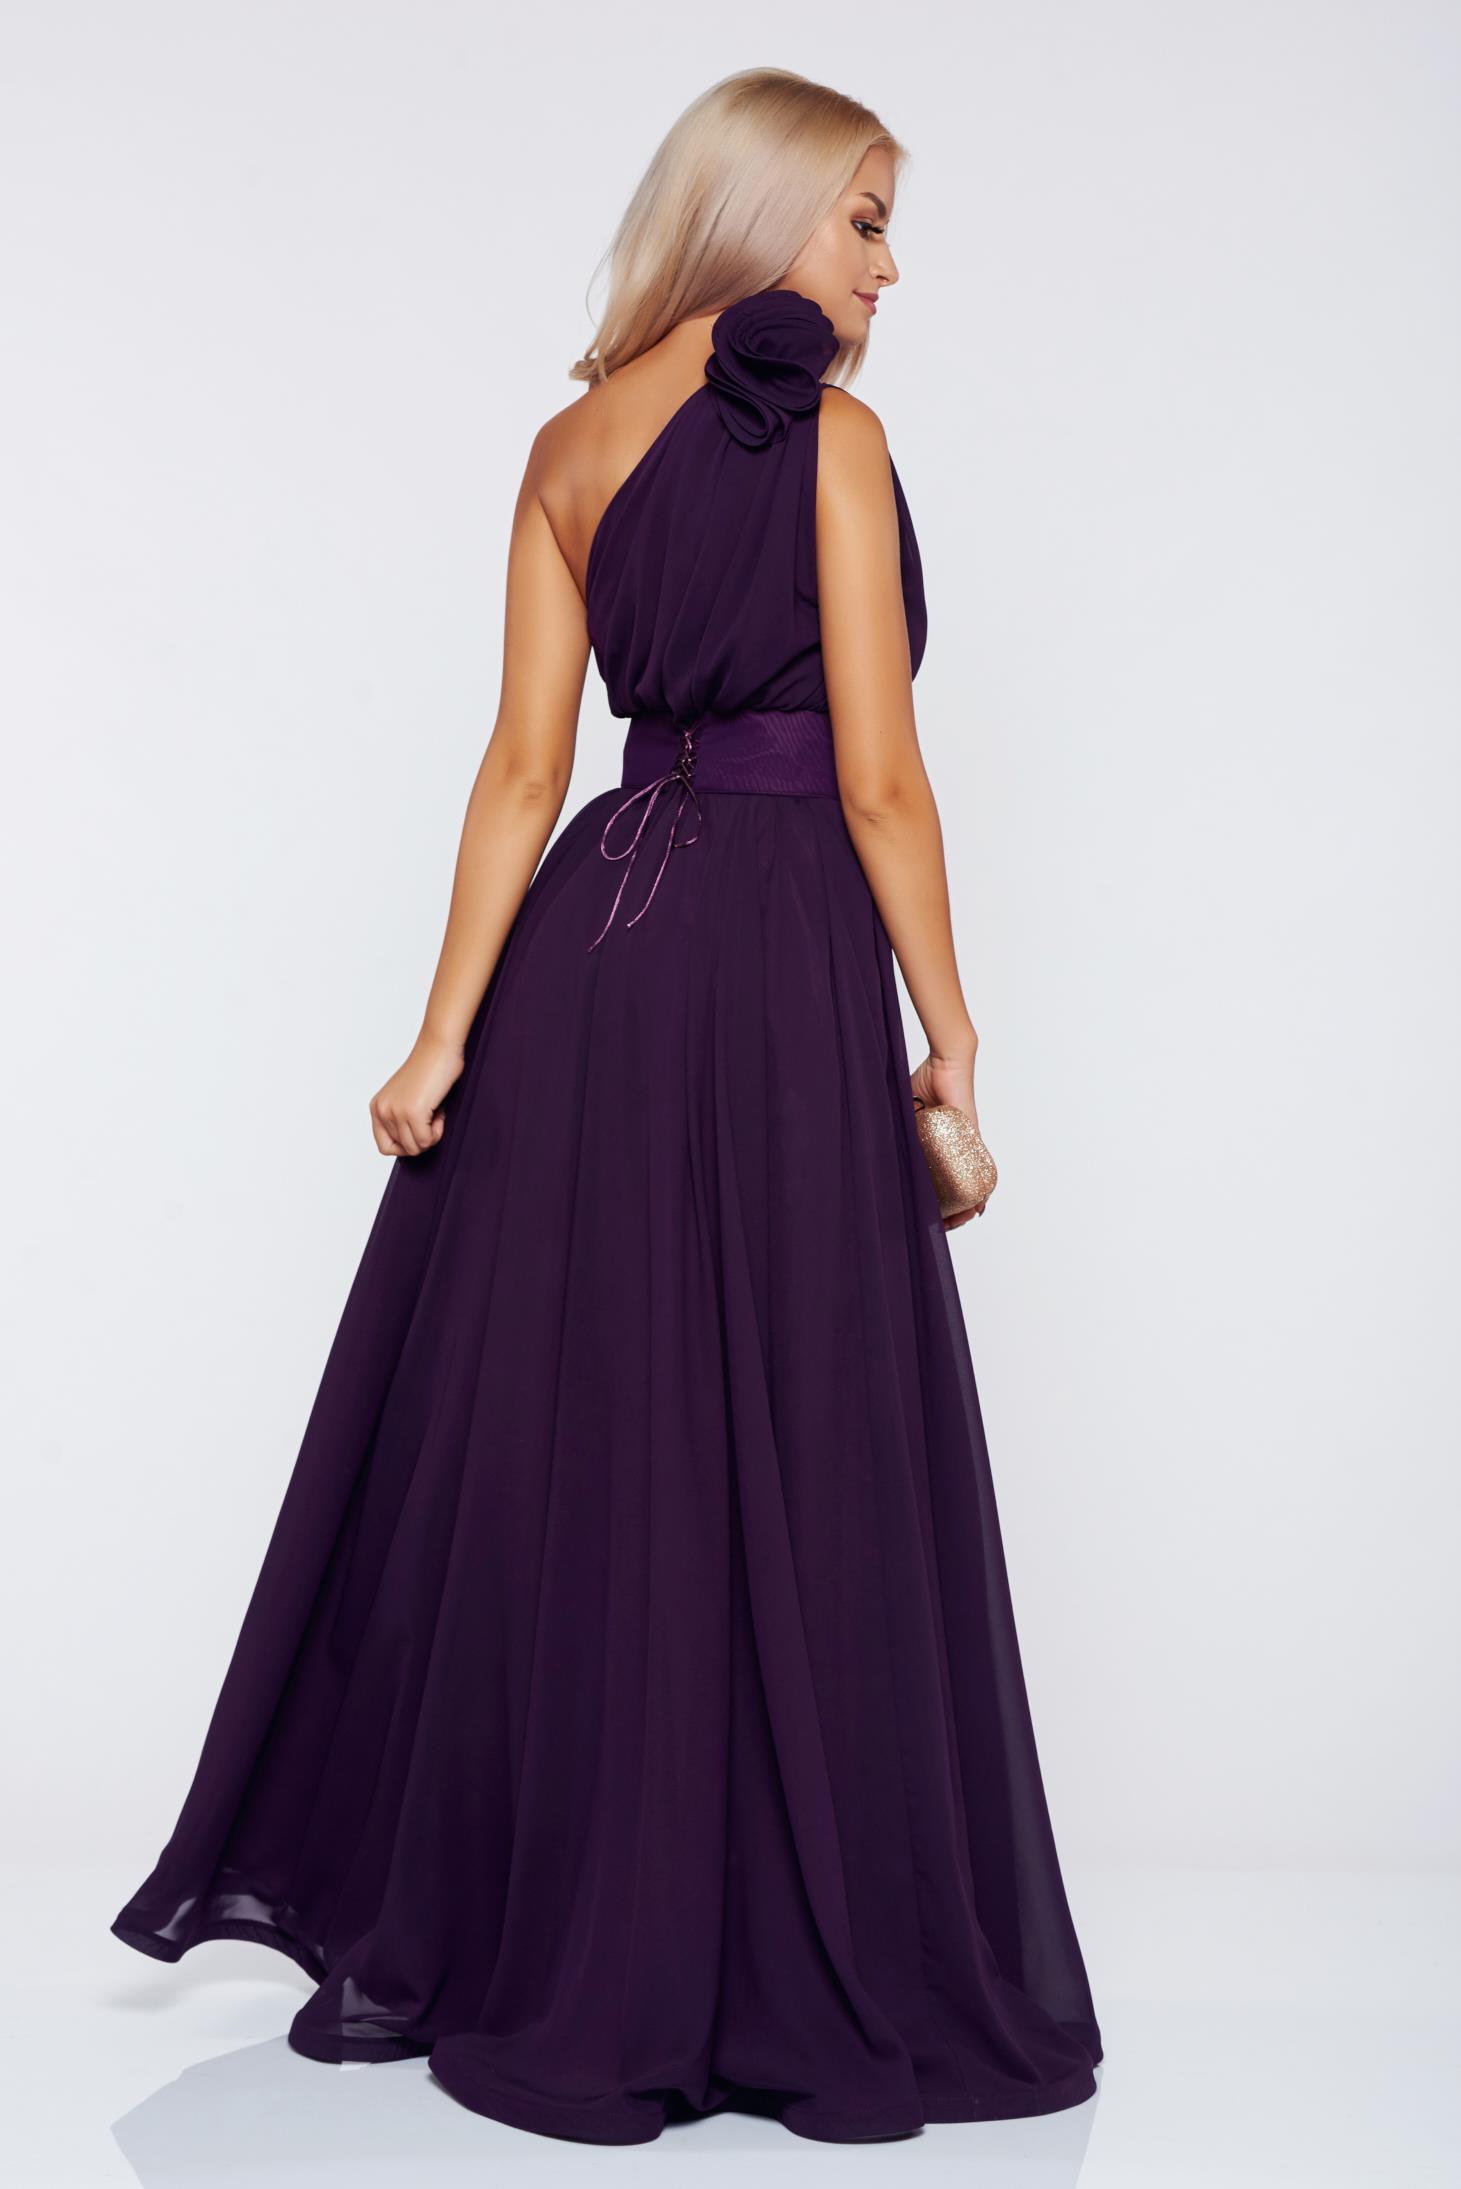 Occasional Ana Radu purple voile fabric one shoulder dress 2 - StarShinerS.com